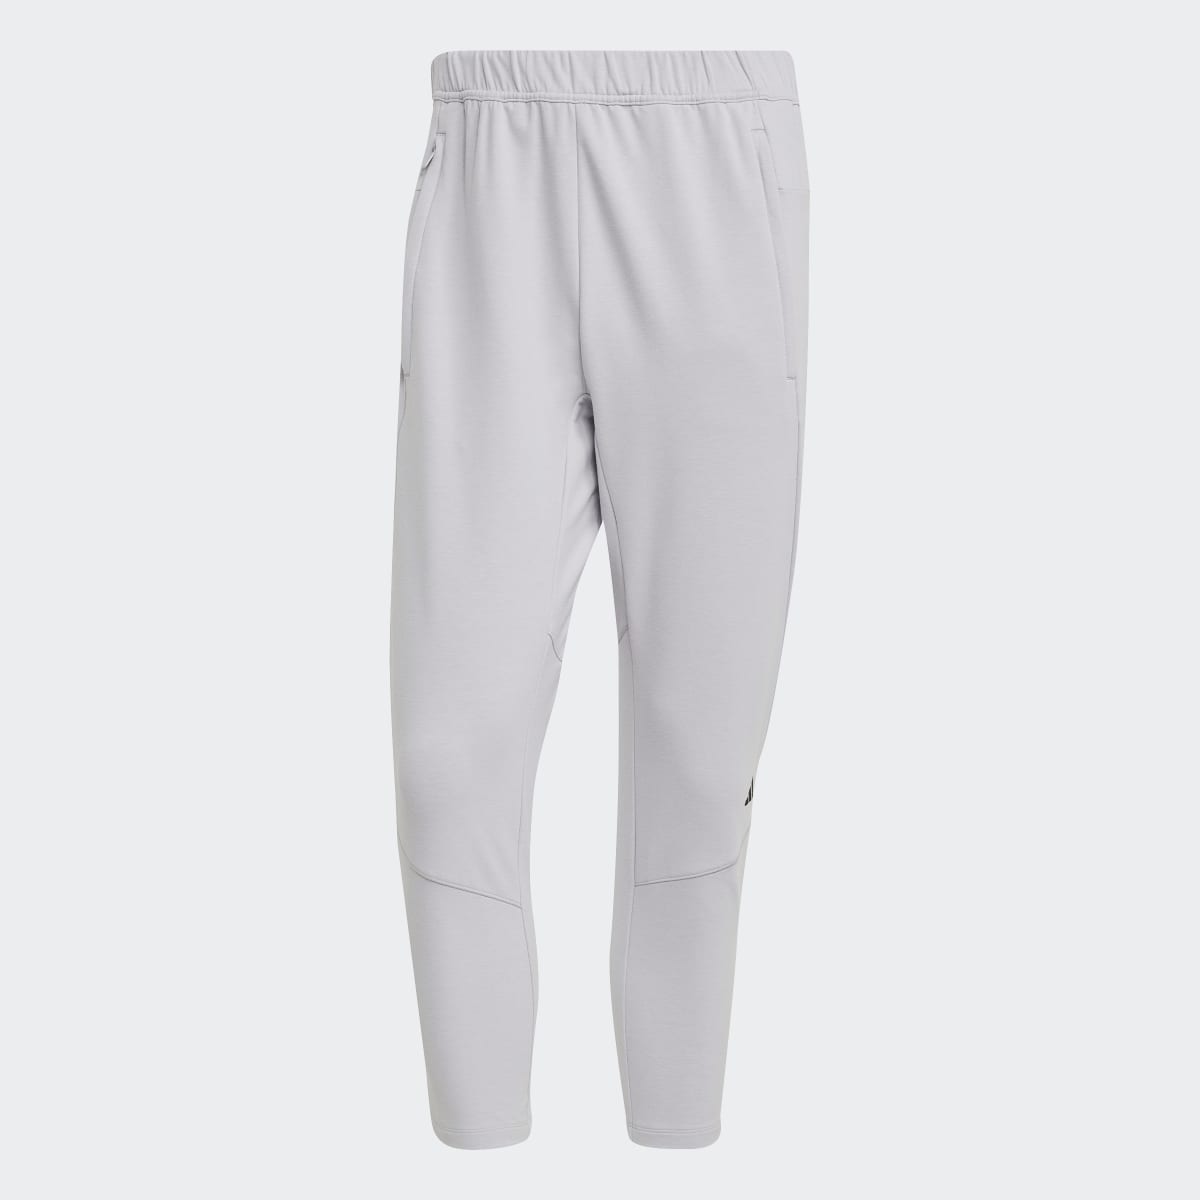 Adidas Pants de Yoga Designed for Training 7/8. 4